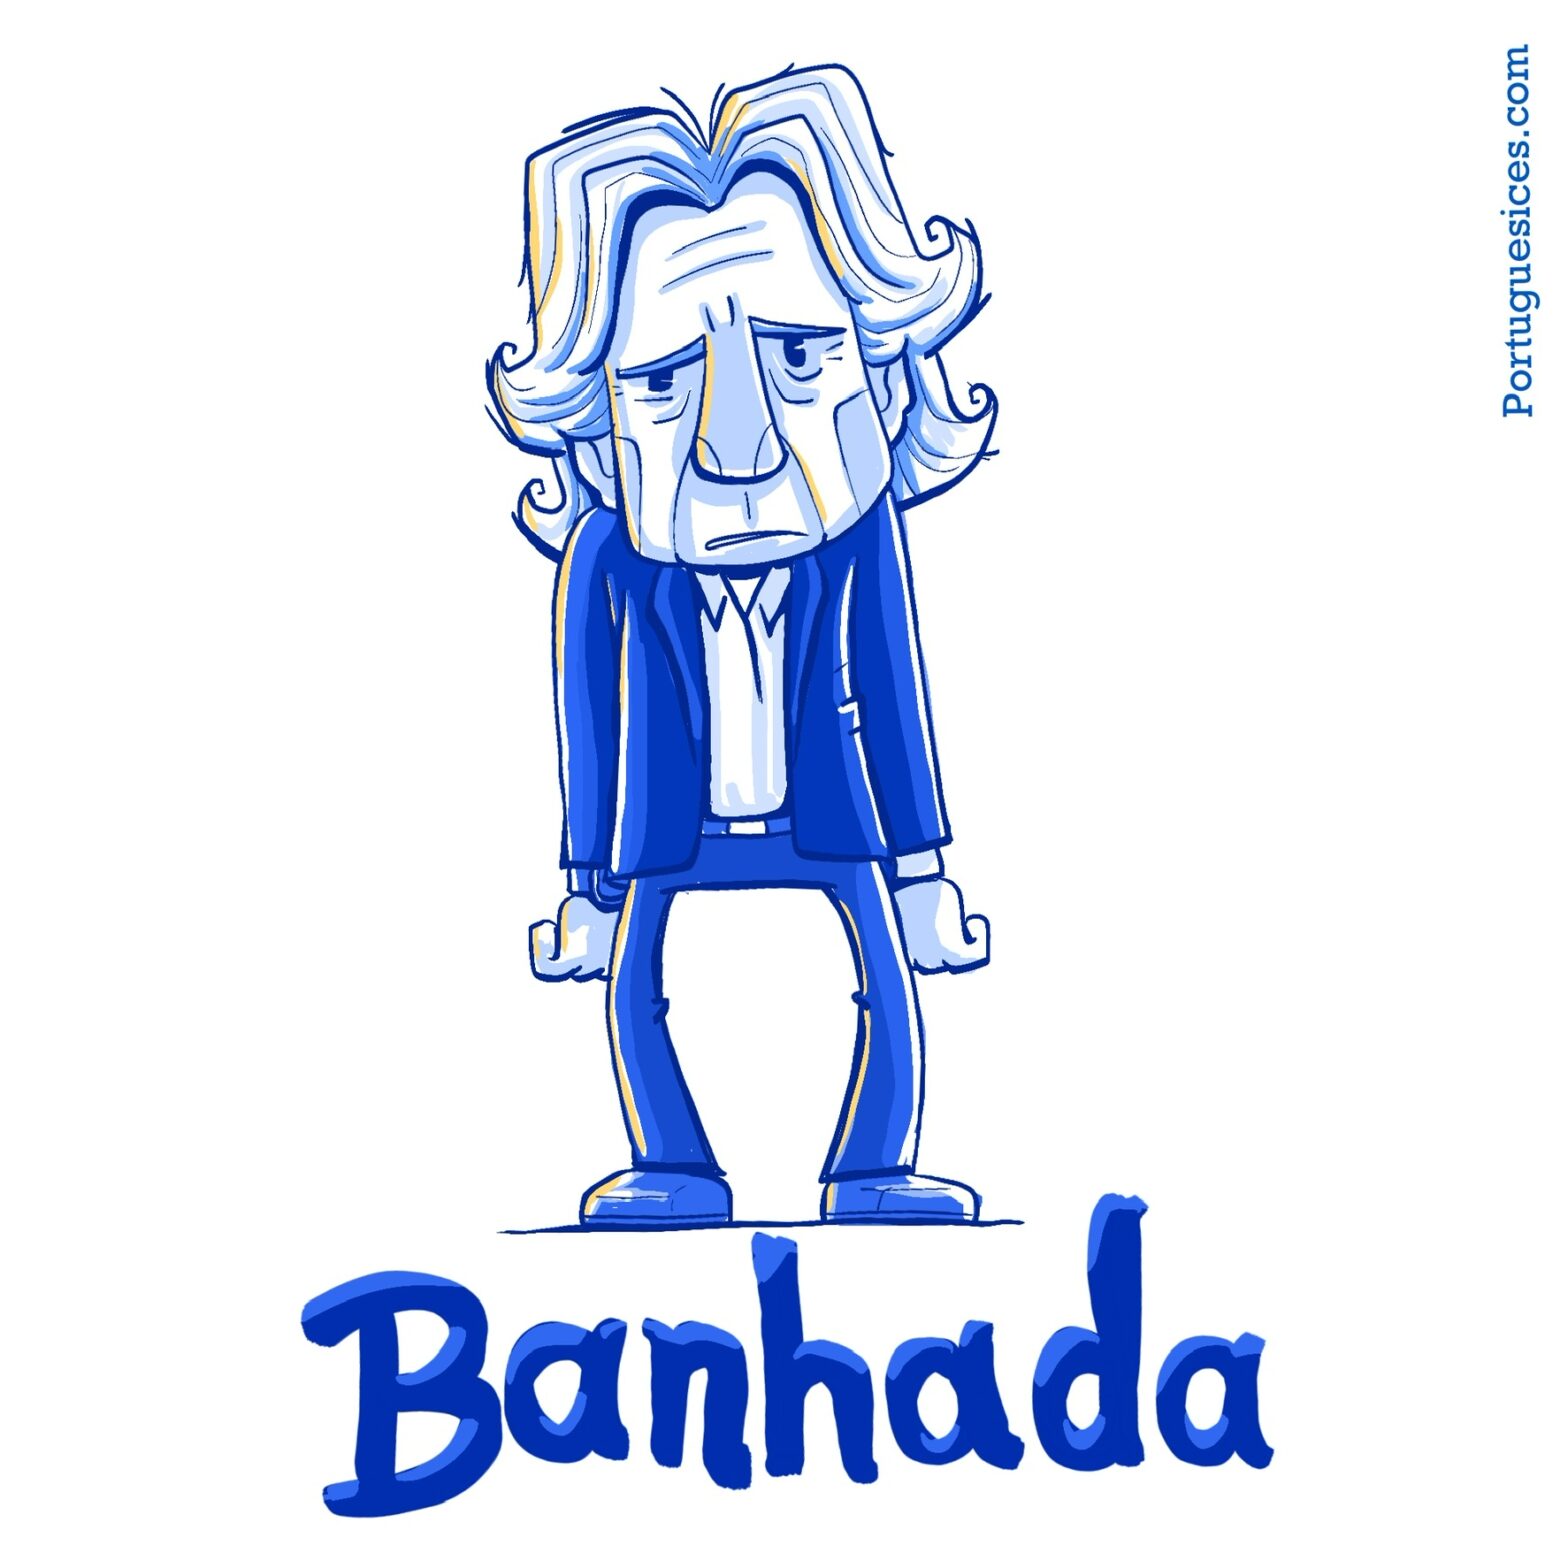 Banhada